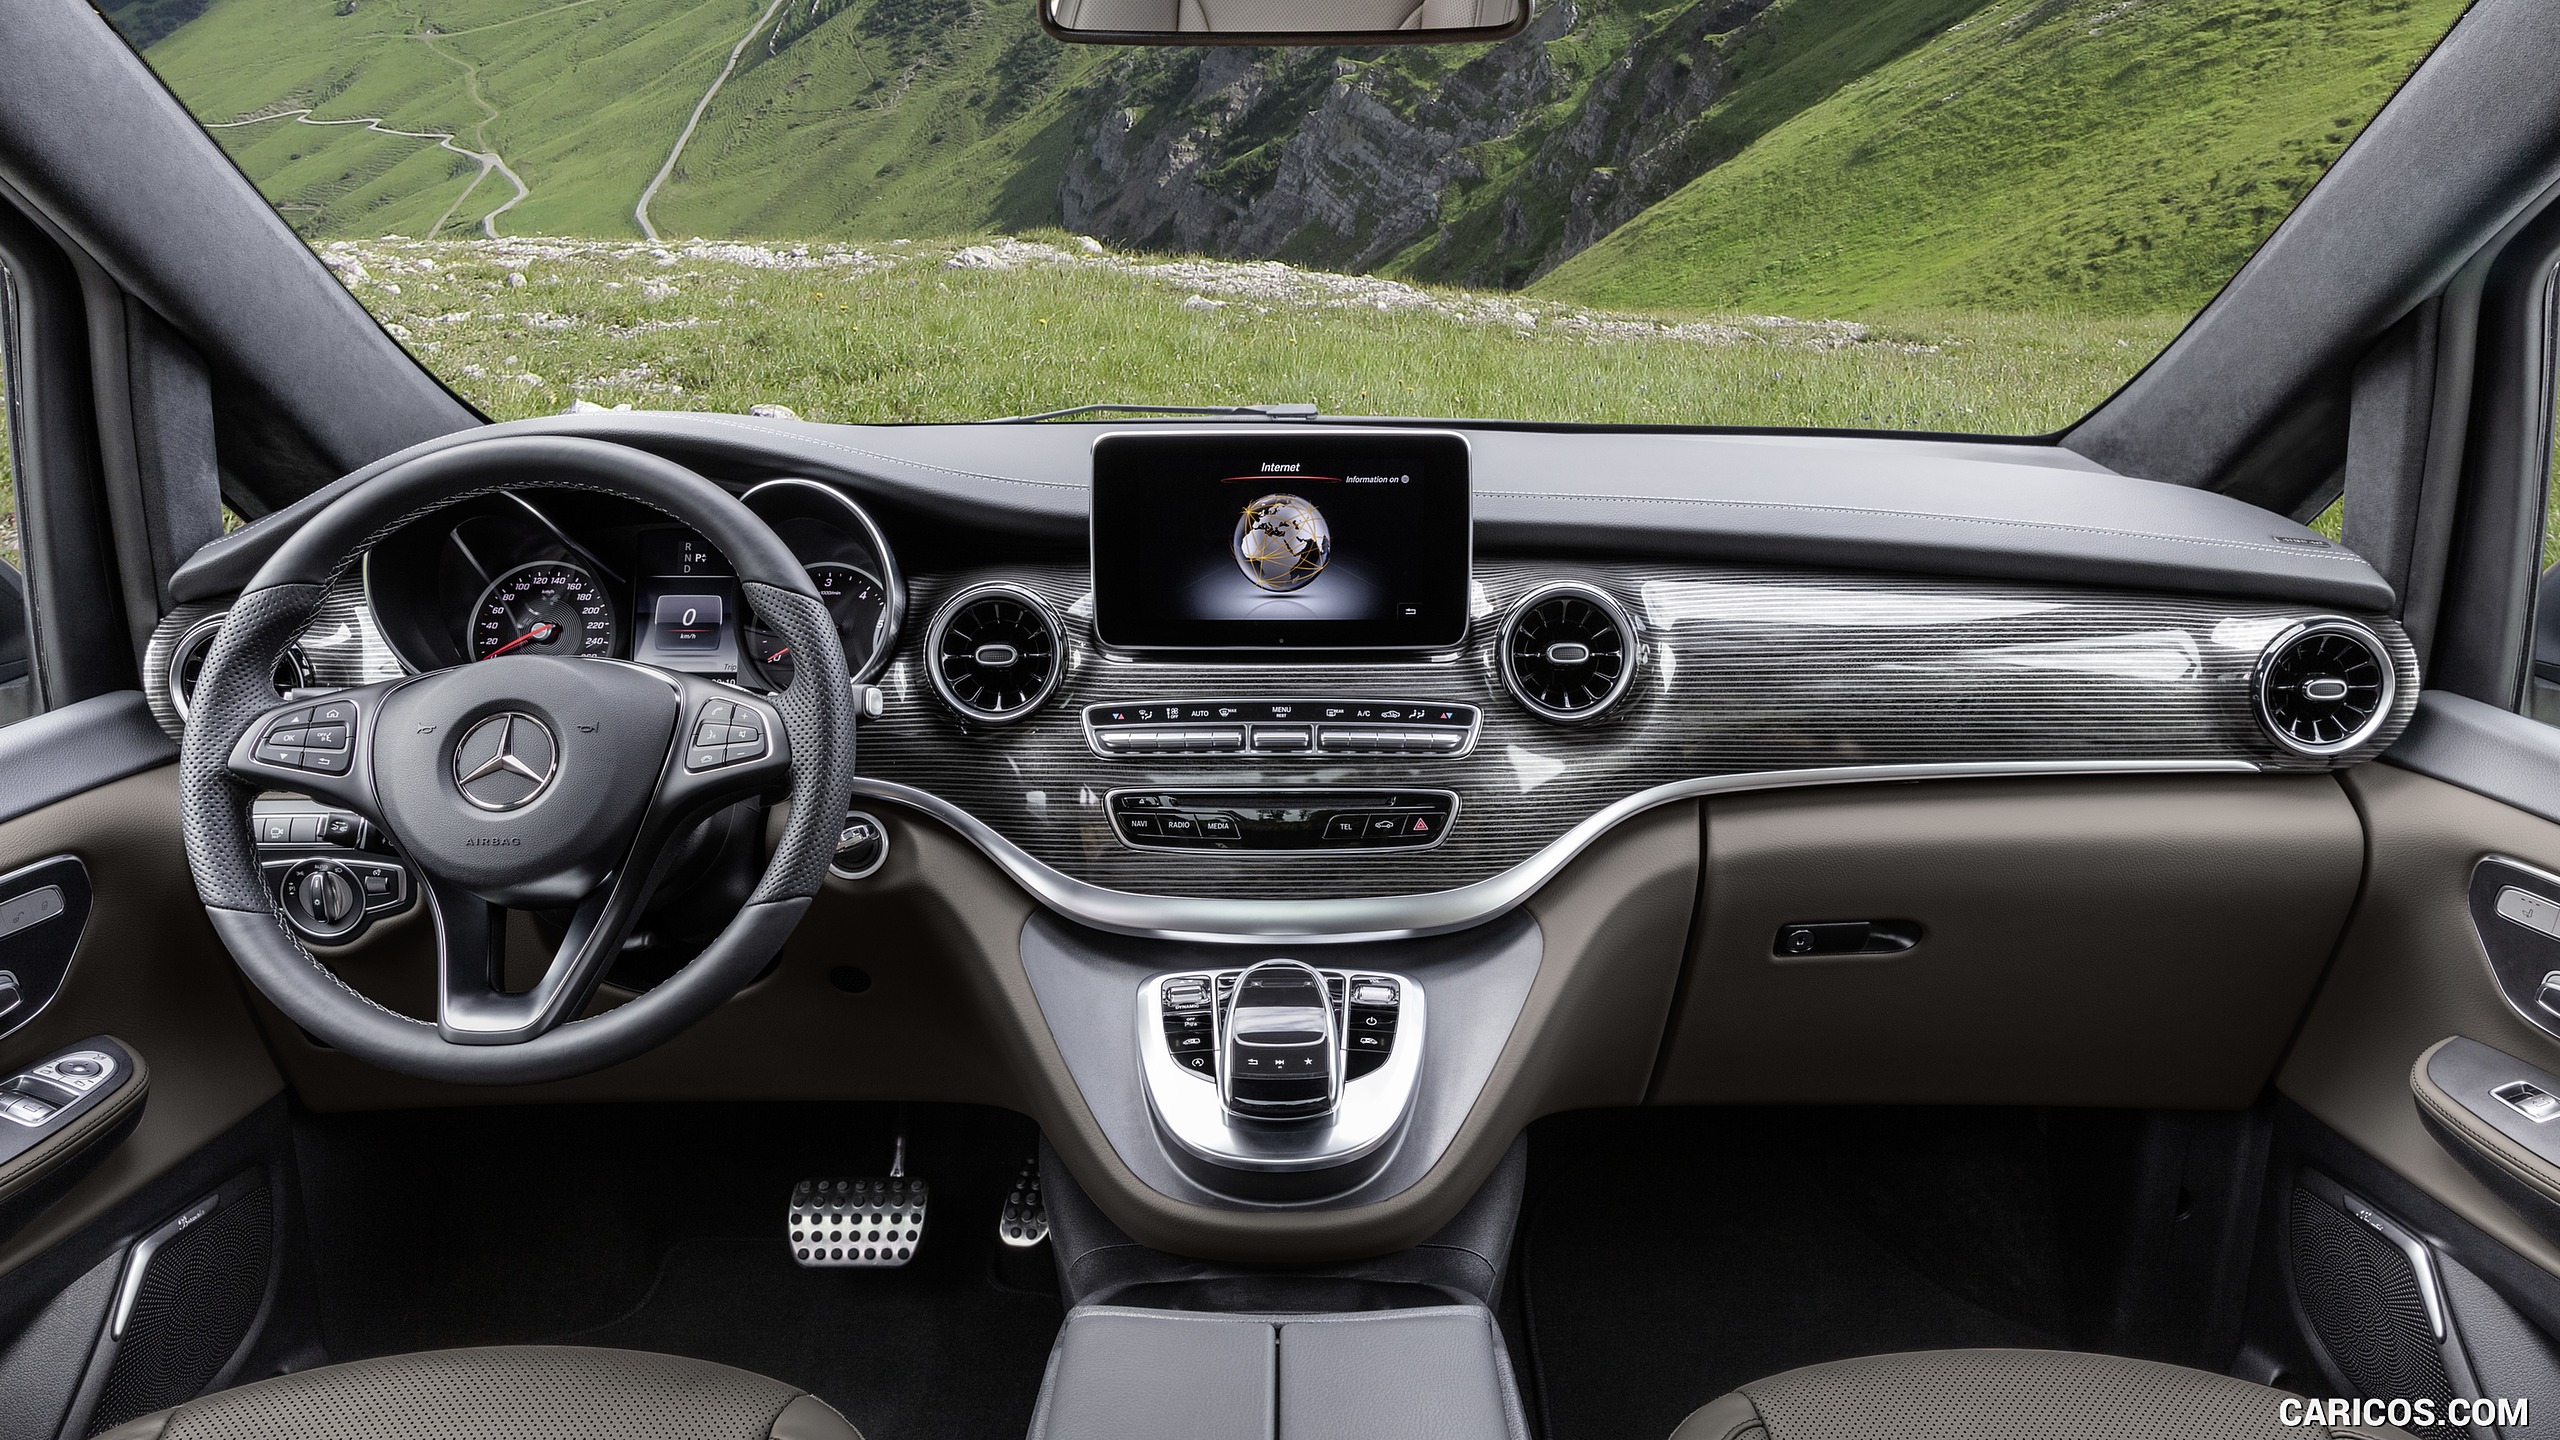 2019 Mercedes-Benz V-Class EXCLUSIVE Line - Interior, Cockpit, #33 of 216